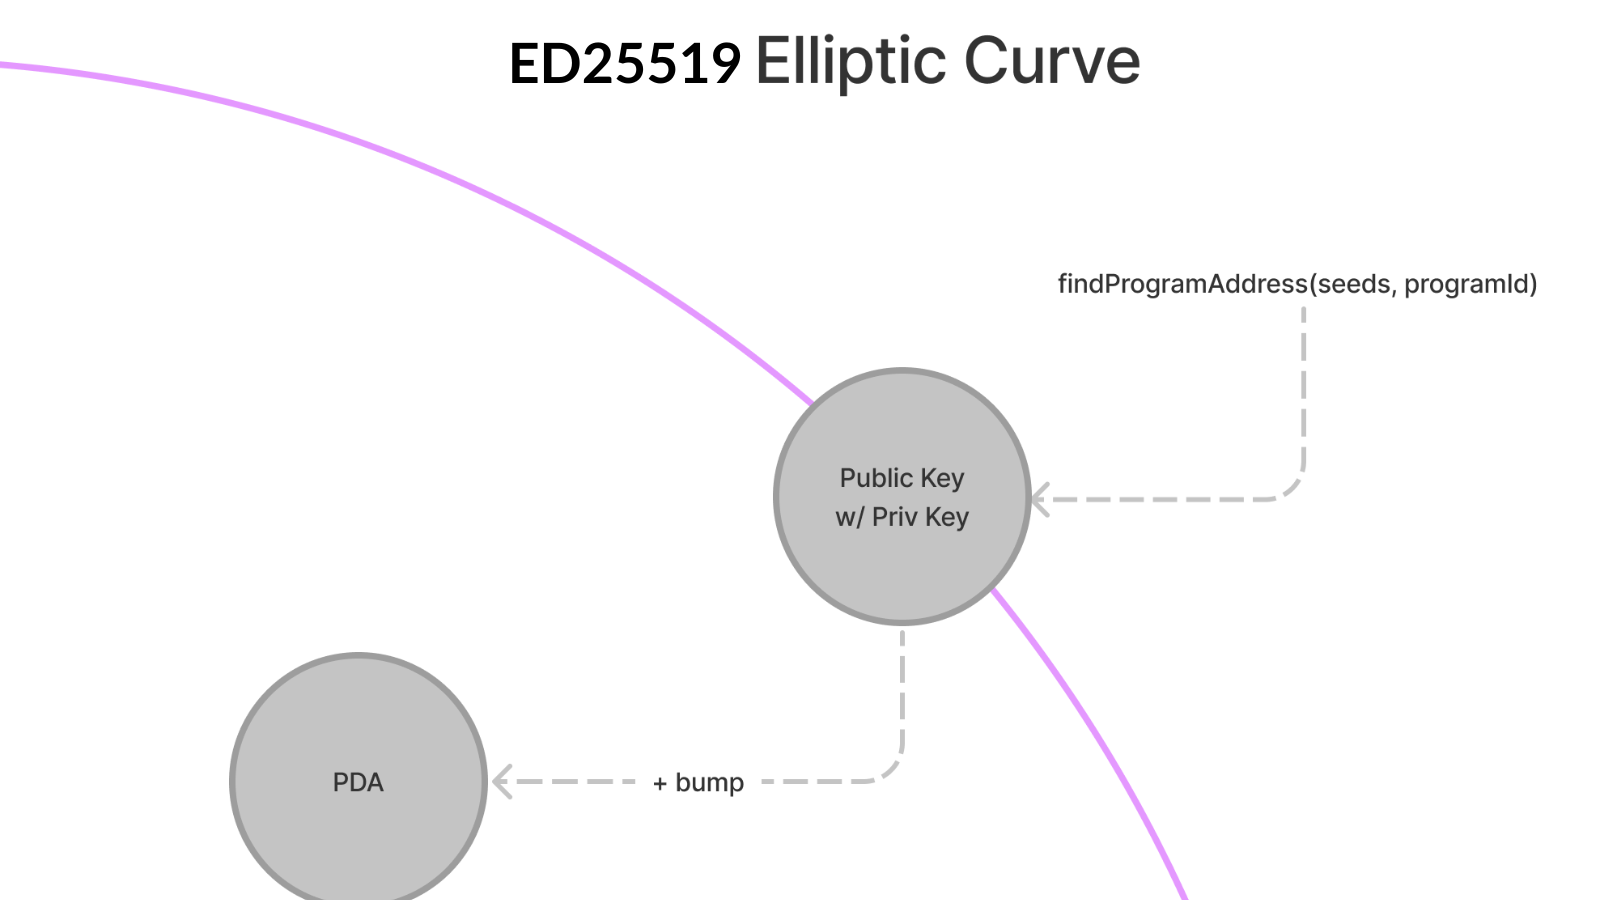 ED25519 Elliptic Curve on Solana